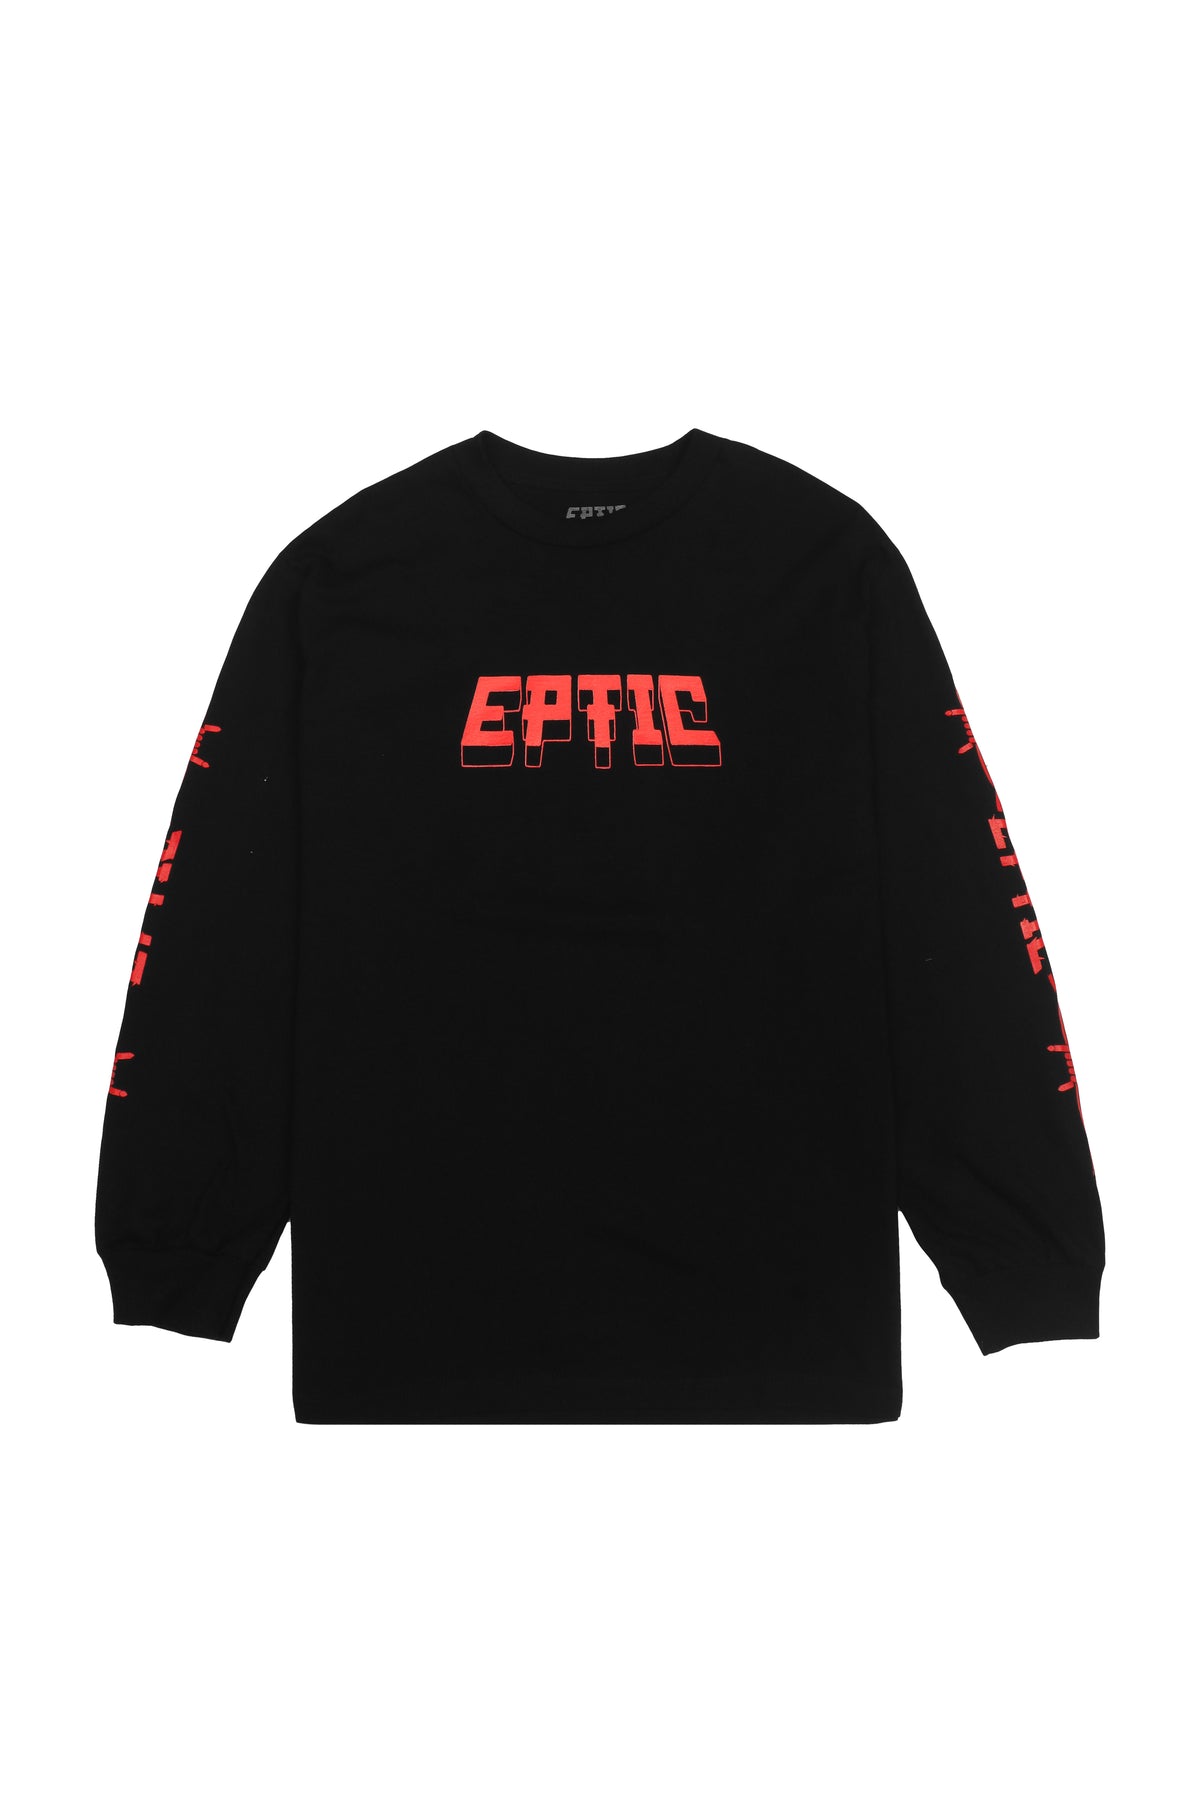 Eptic Edge Lord Supreme Shirt - Red